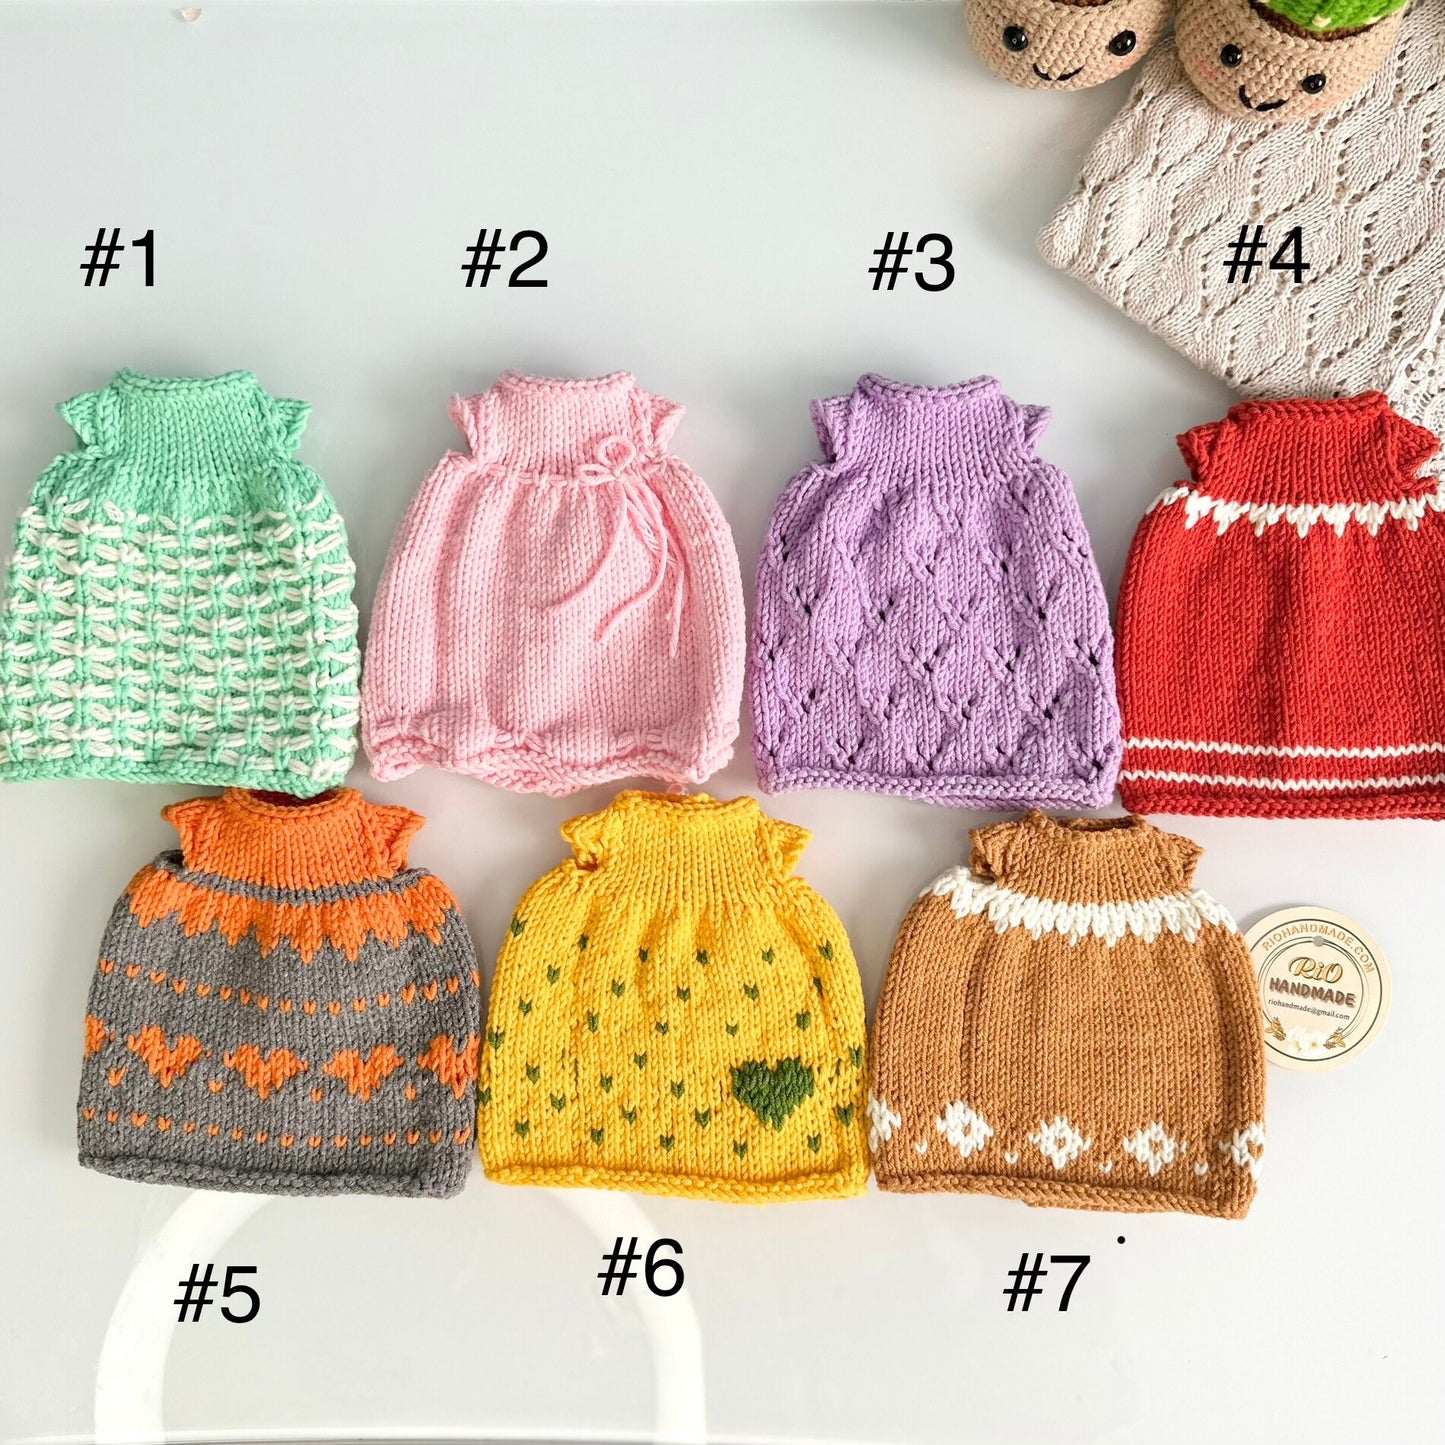 Ready To Ship, Handmade yarn cotton doll crochet, amigurumi doll, cute, soft toy for baby, toddler, kid, adult hobby